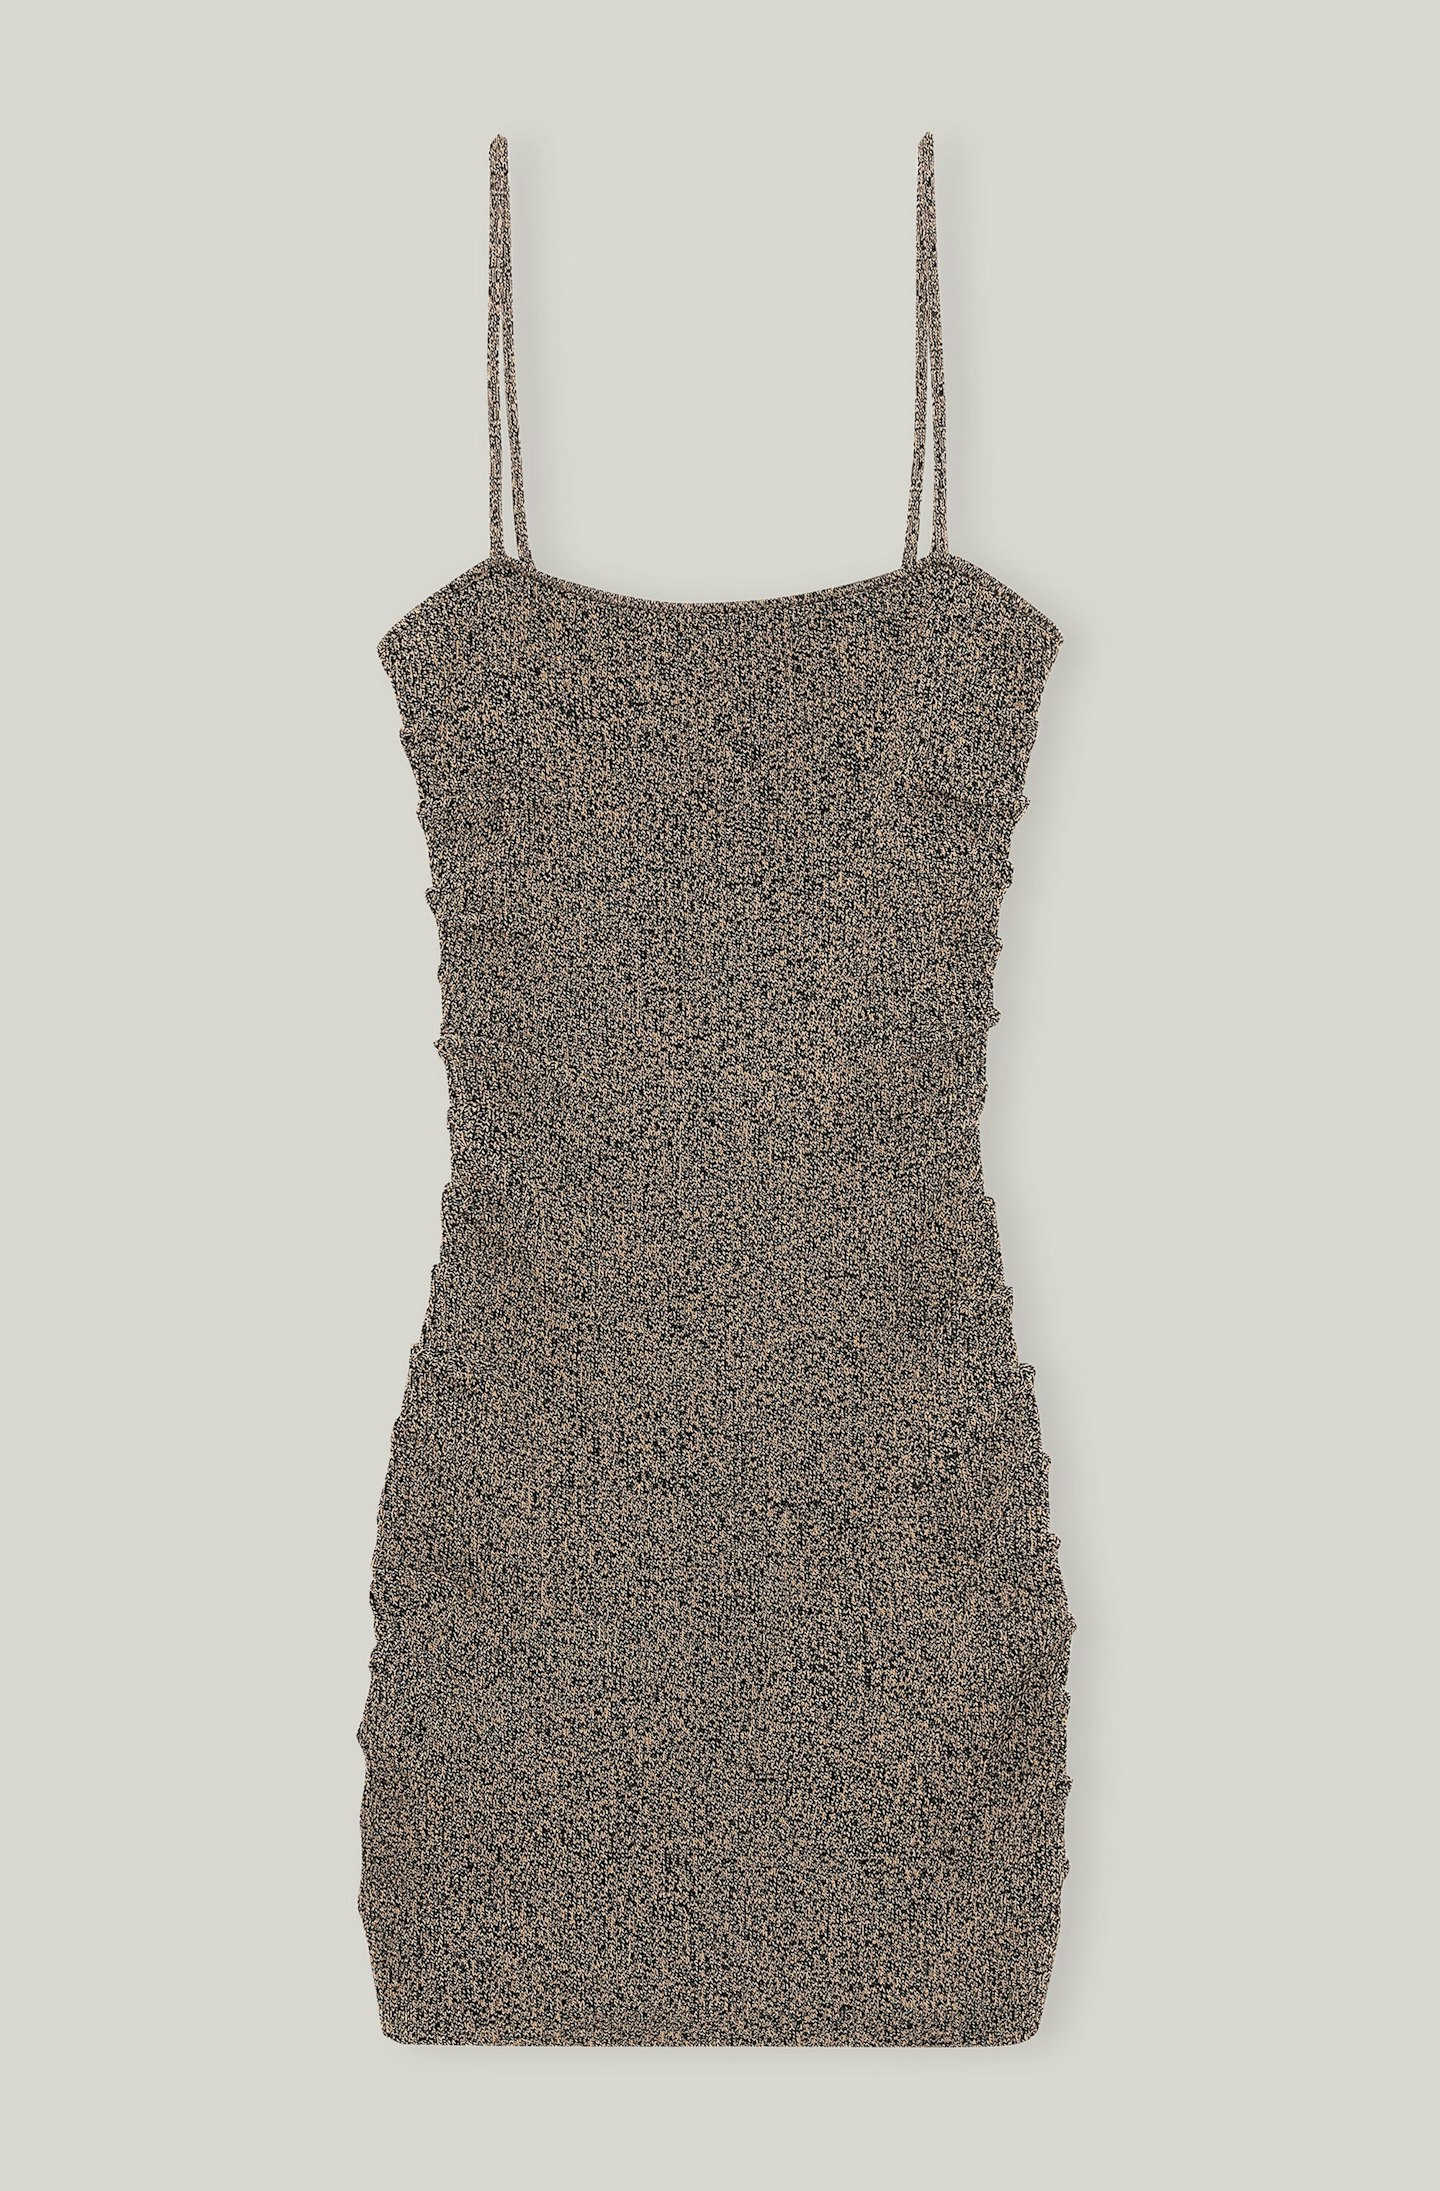 Ganni, Melange Knit Mini Dress, £155